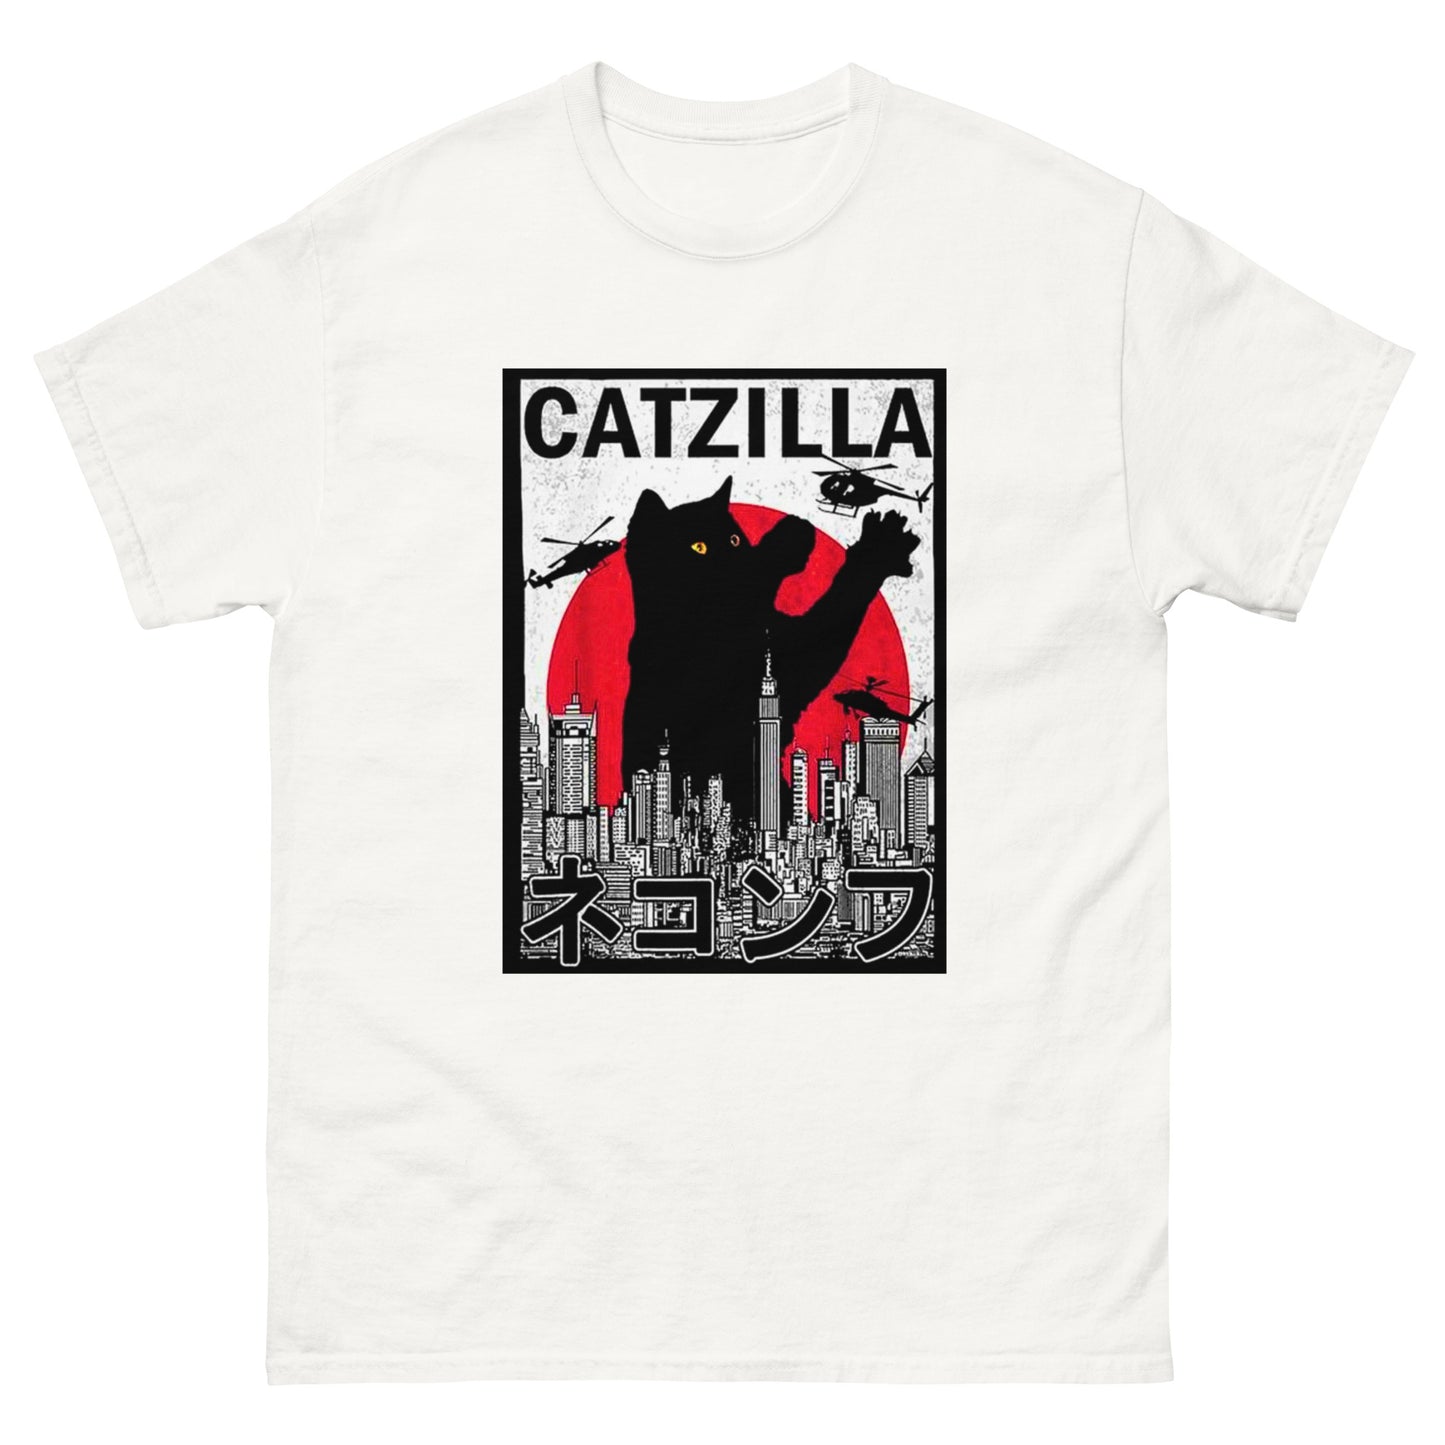 Catzilla T-Shirt